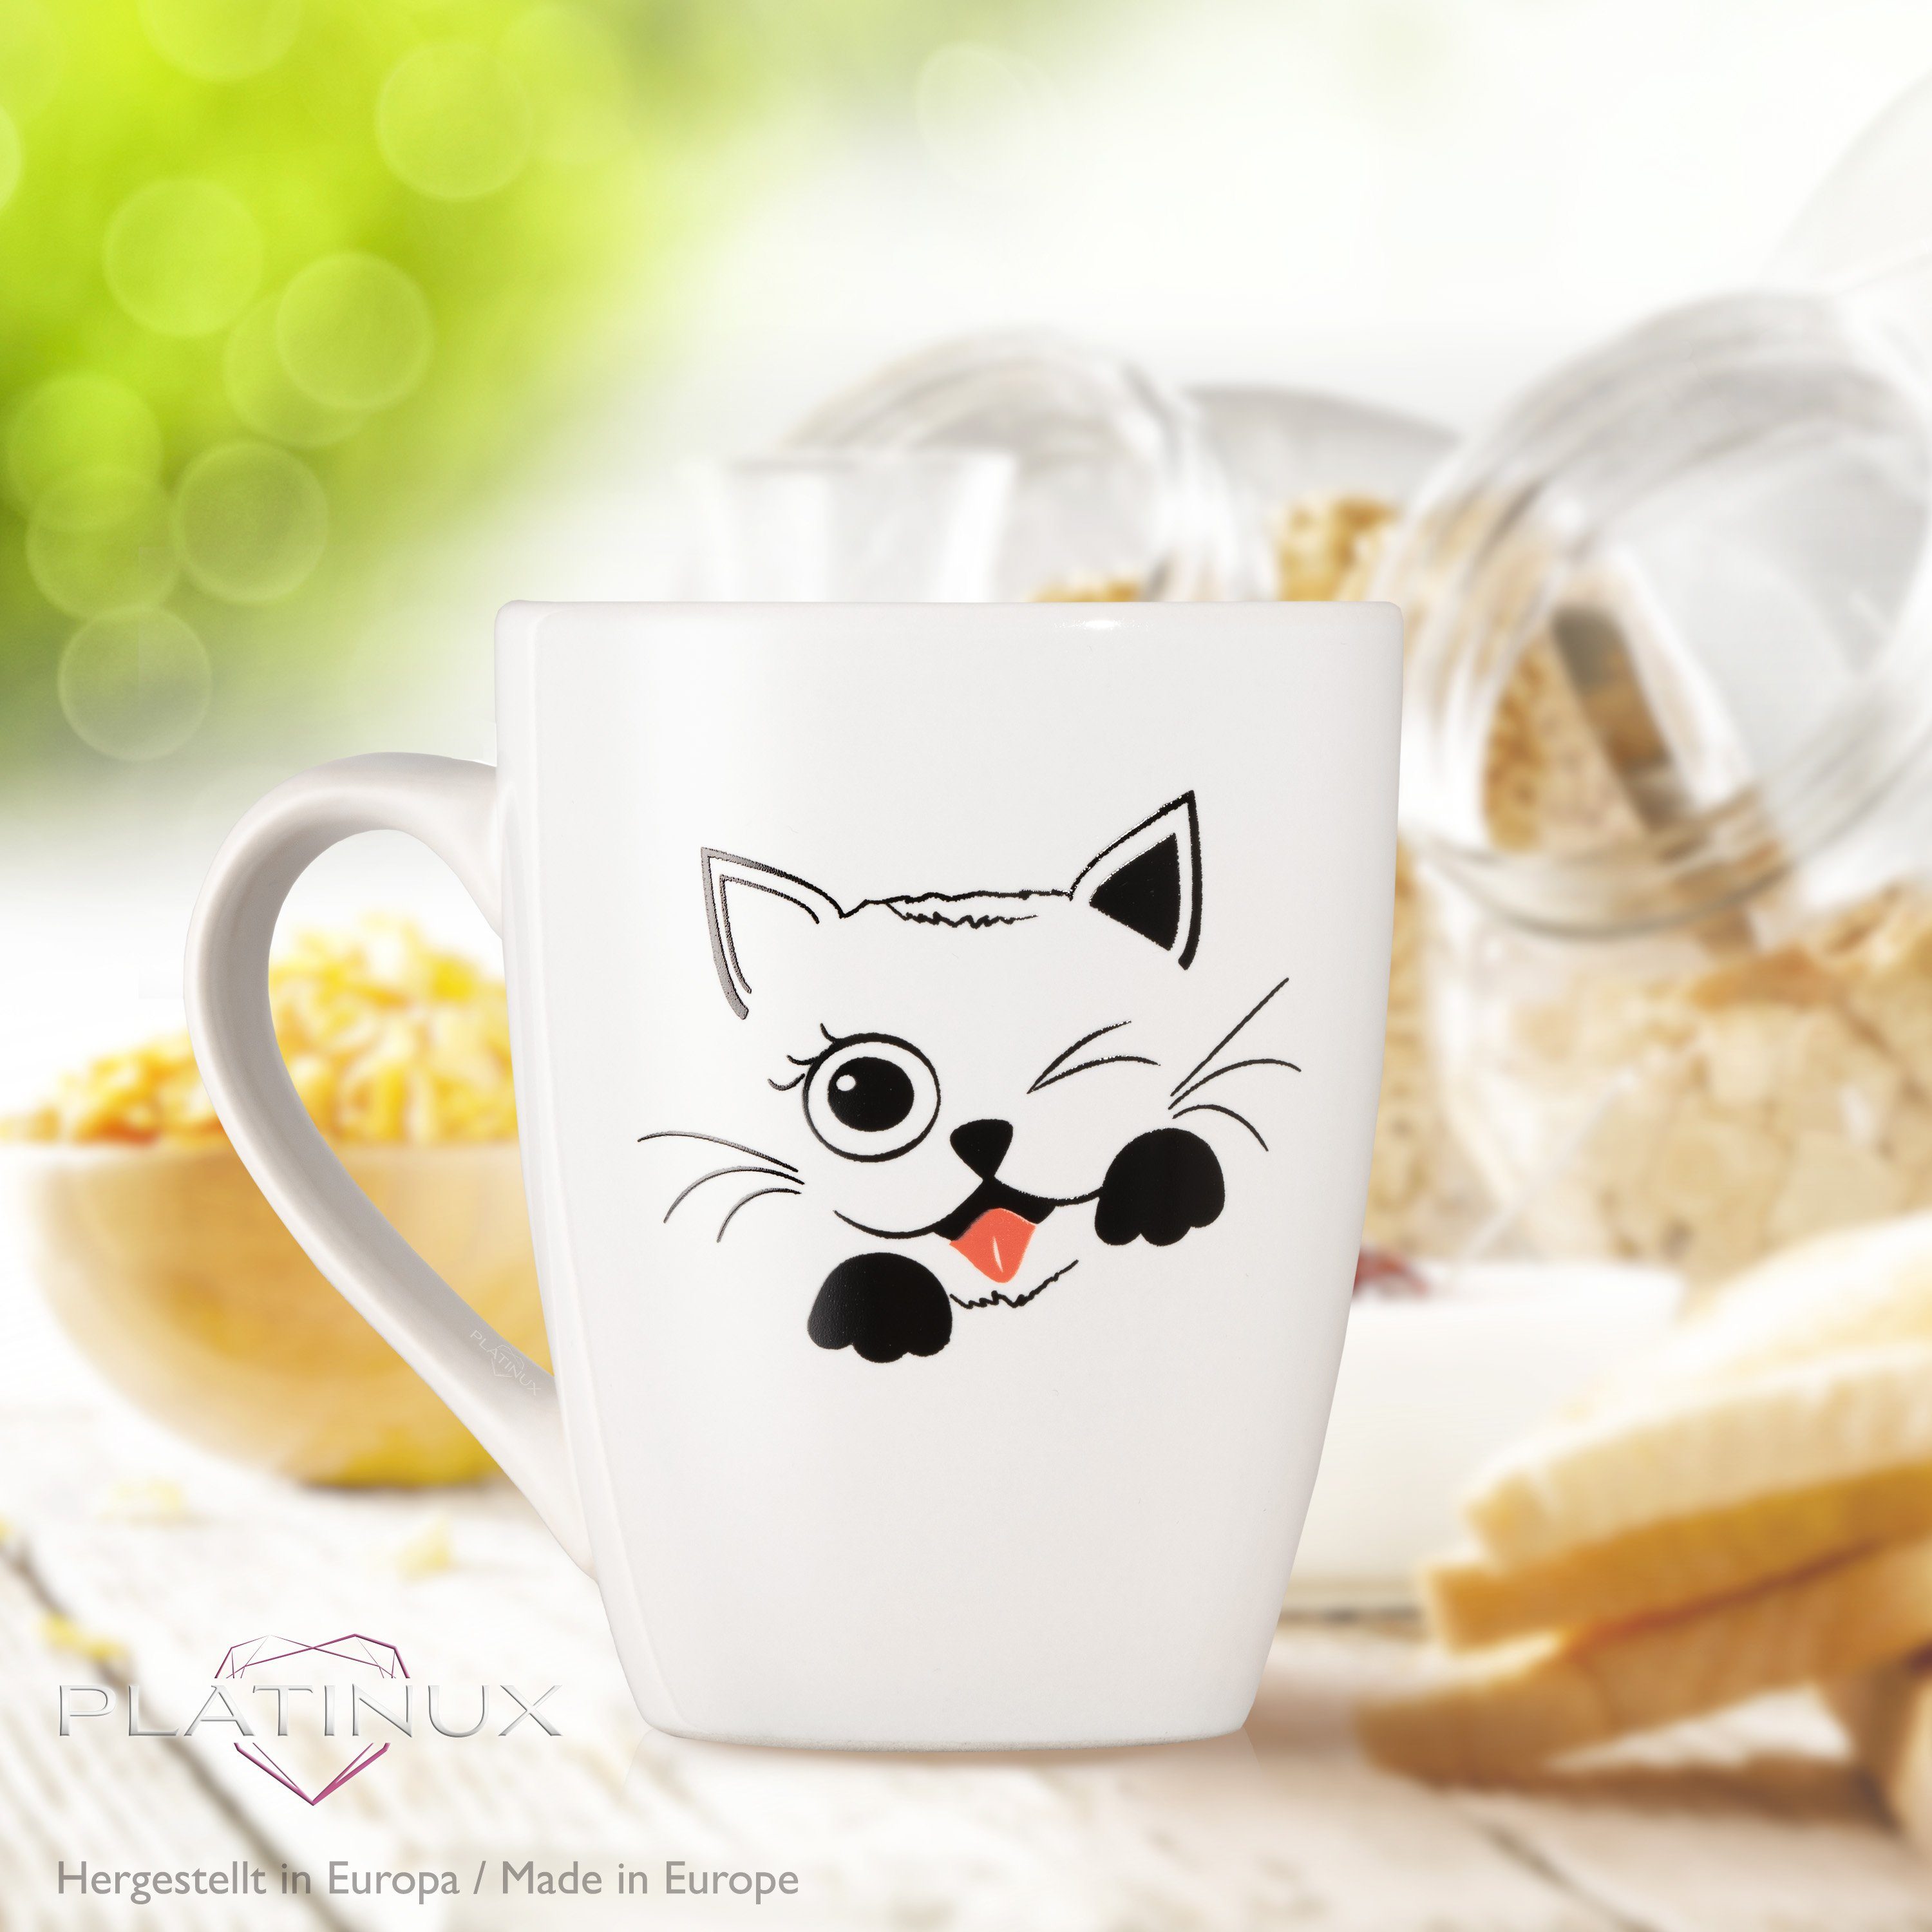 300ml) 250ml, Teetasse Kaffeebecher (max. Kaffeetasse "Coco" Keramik Katzen Griff Motiv mit Tasse Tasse Teebecher Keramik, PLATINUX mit